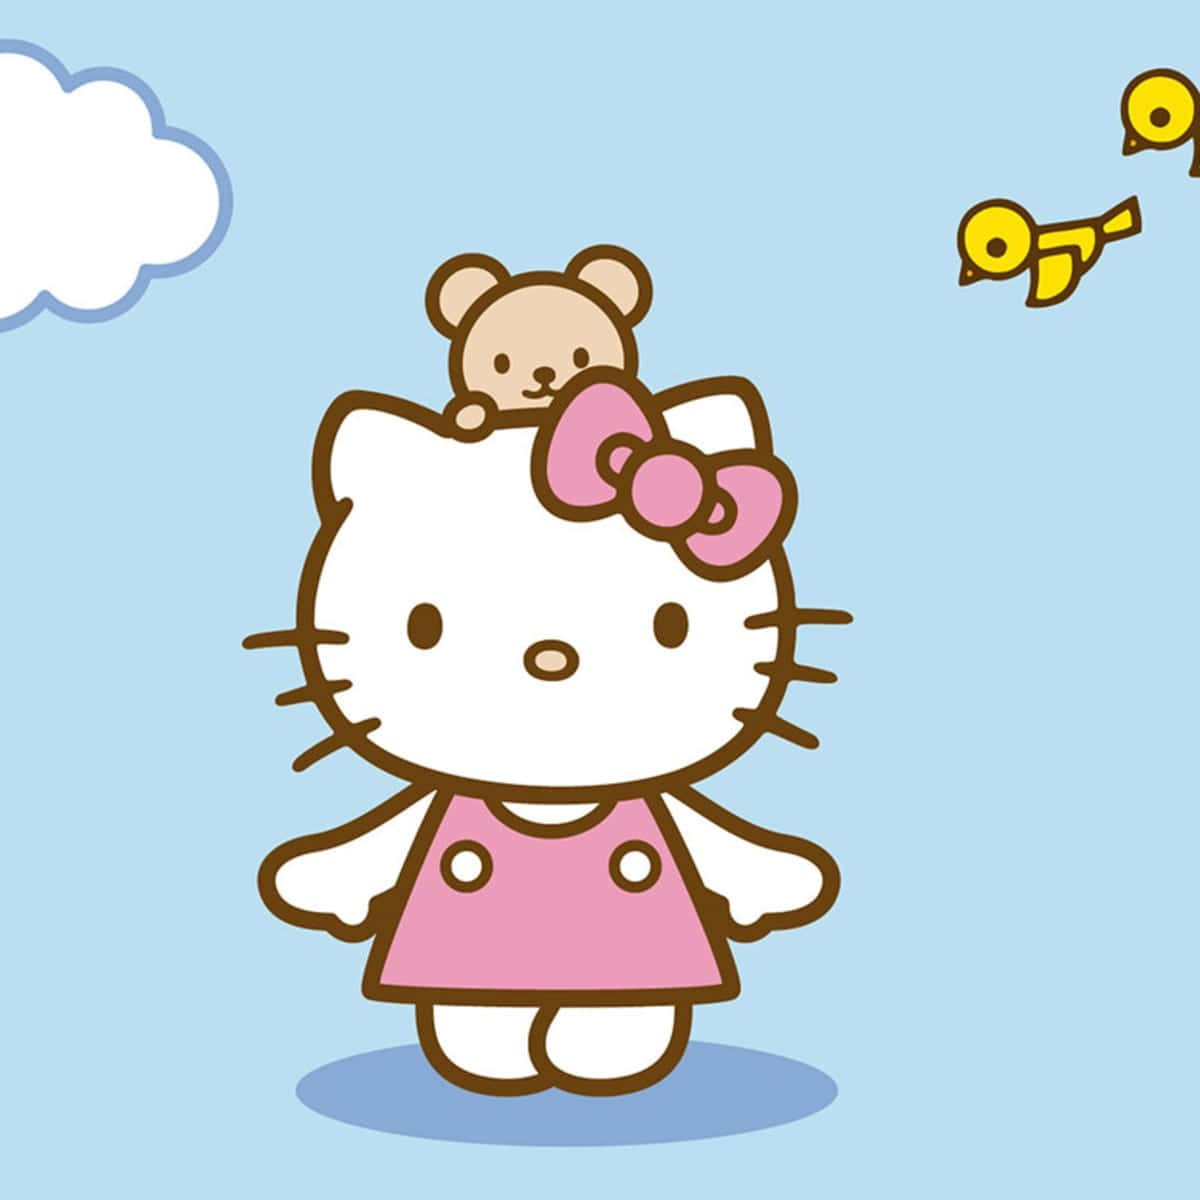 Adorable Kawaii Hello Kitty Wallpaper Wallpaper